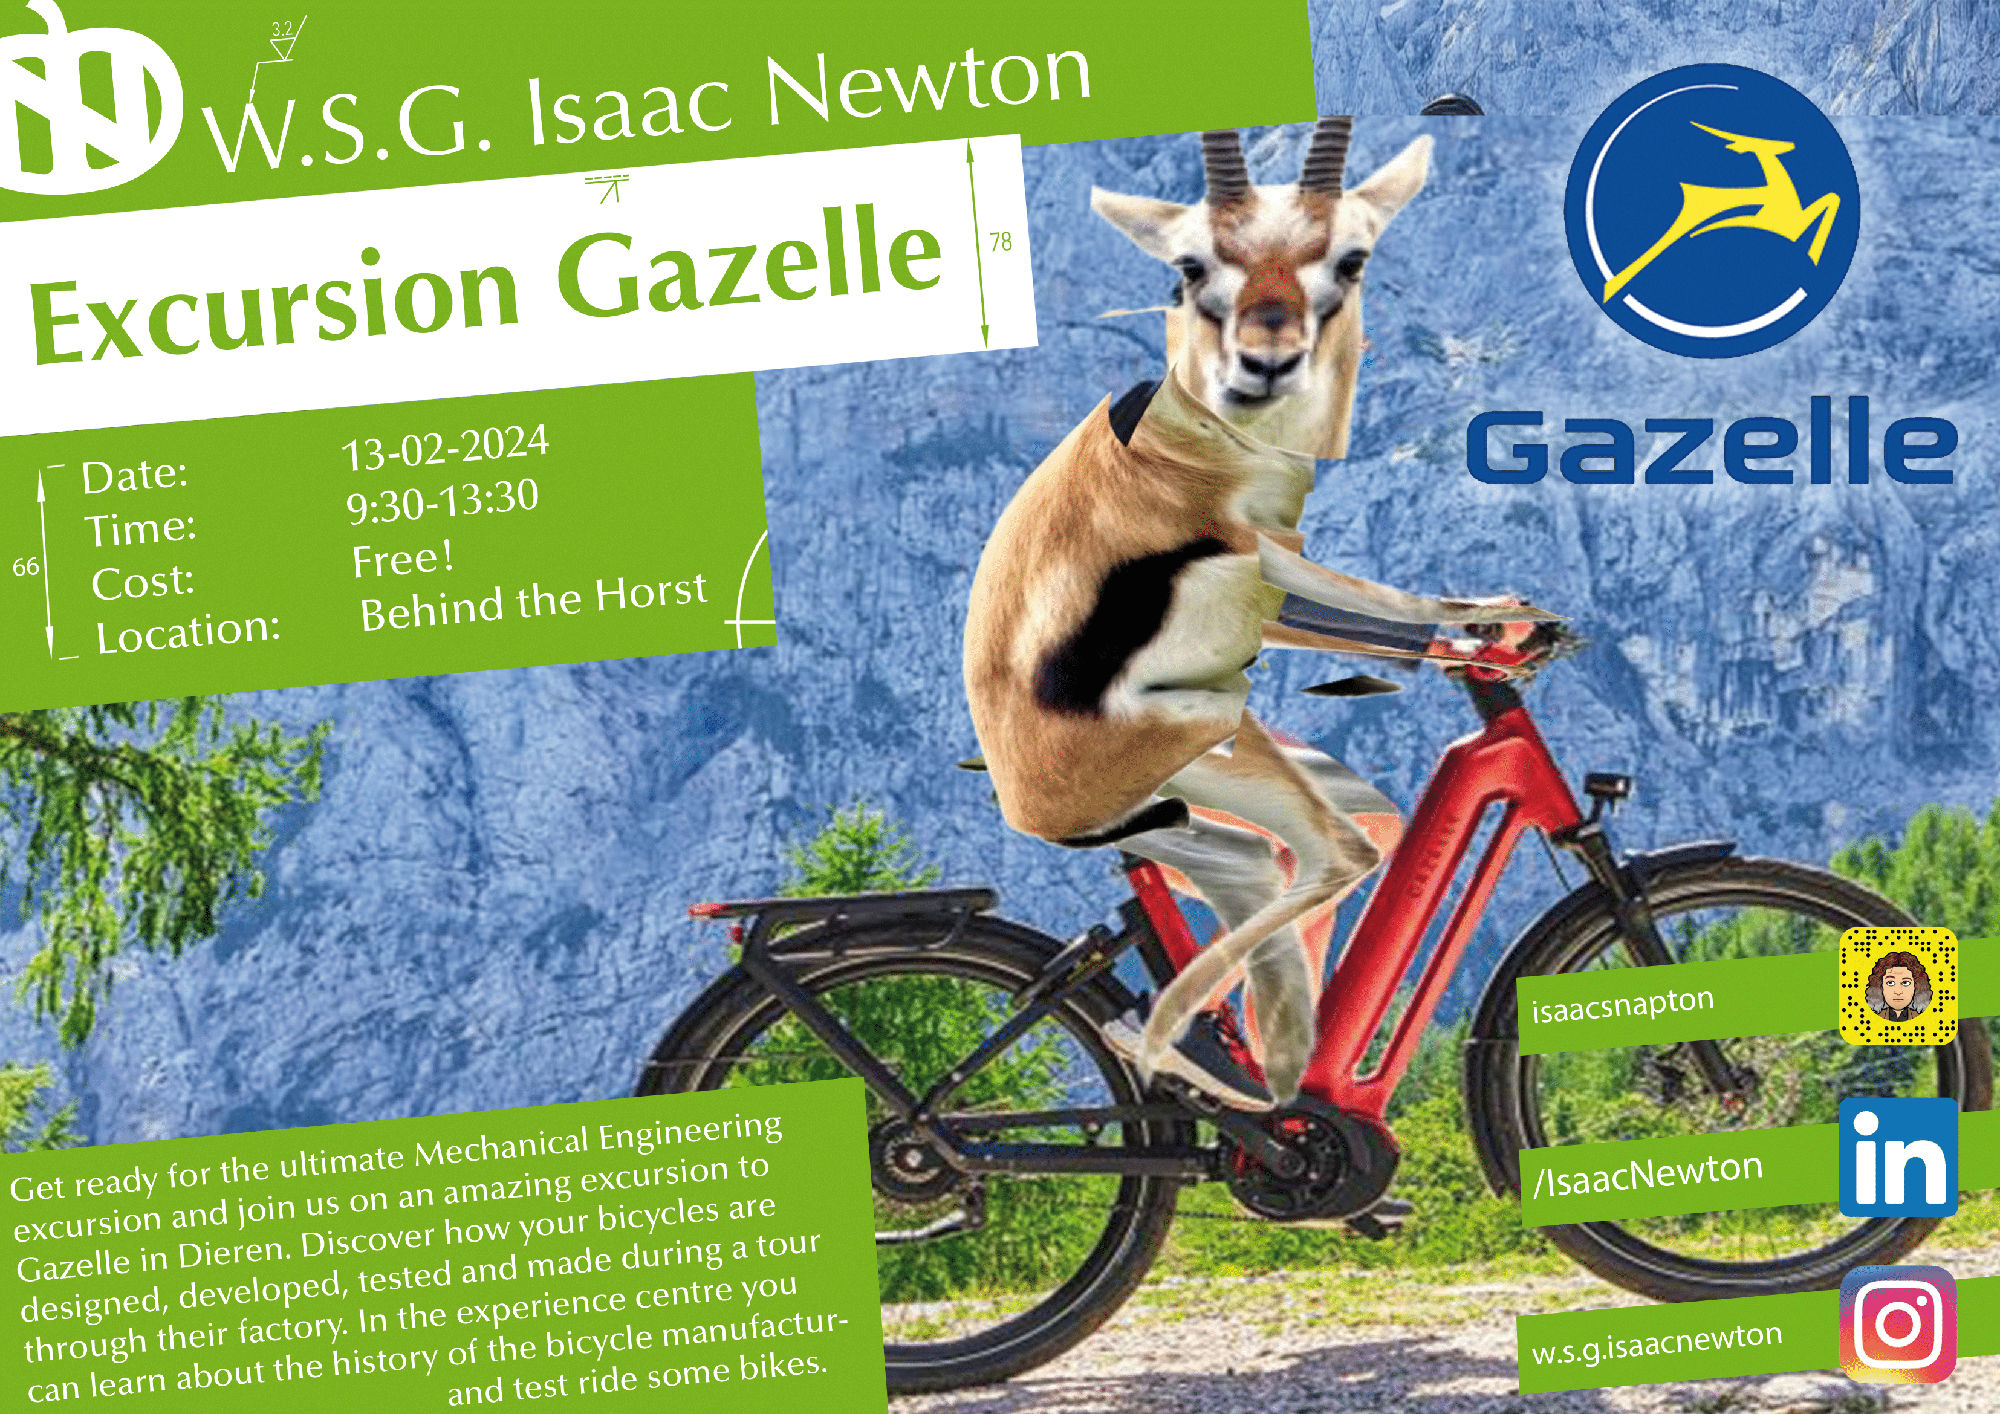 Excursion Gazelle